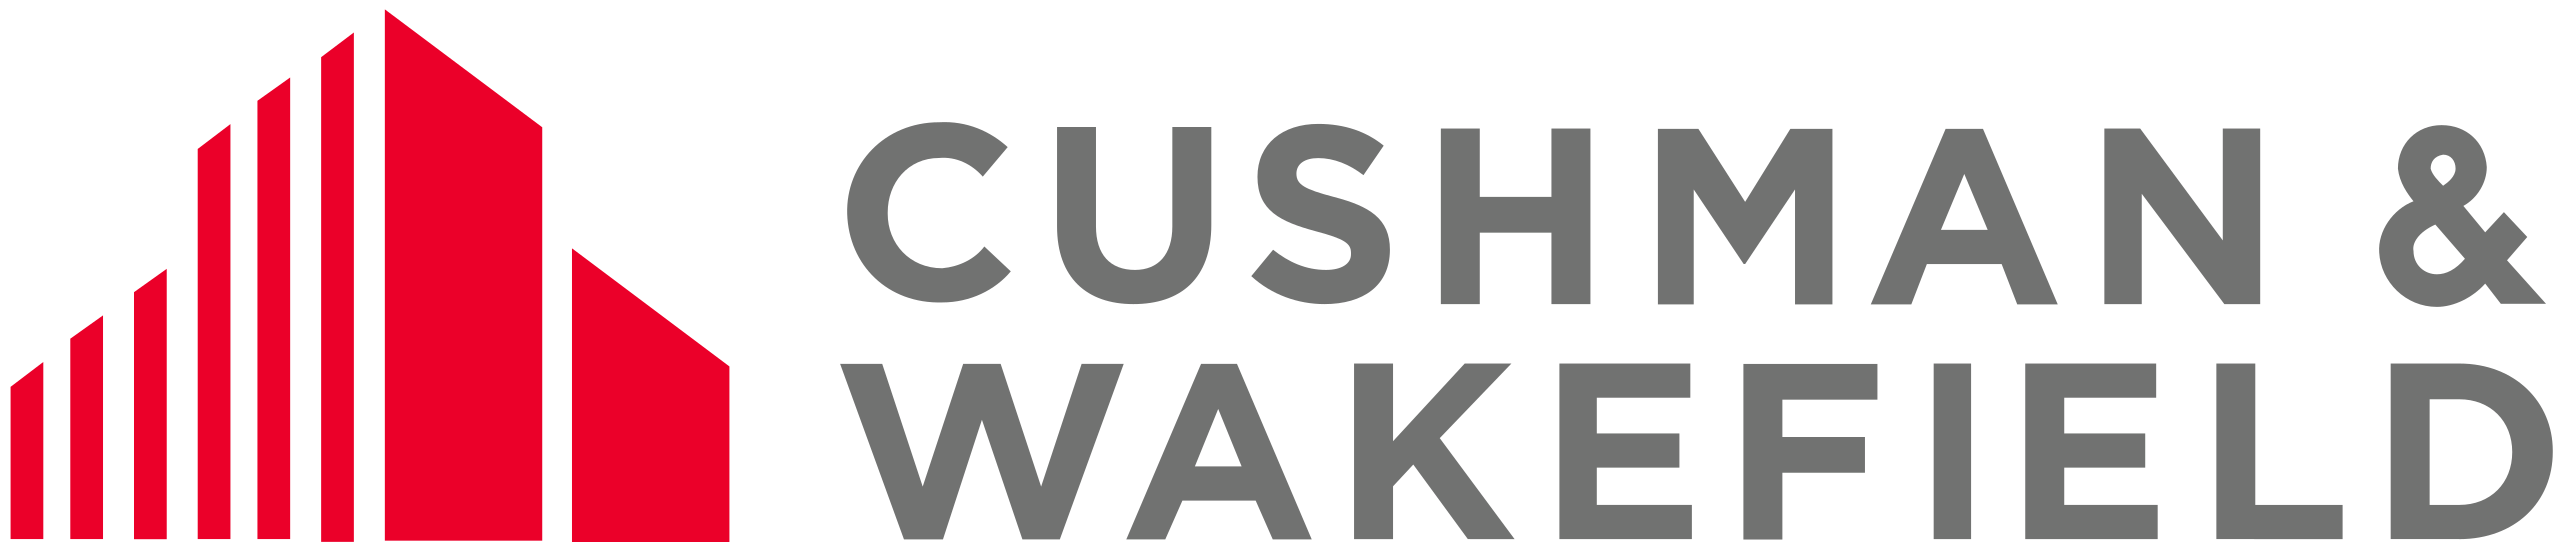 Cushman_&_Wakefield_logo.svg (1)